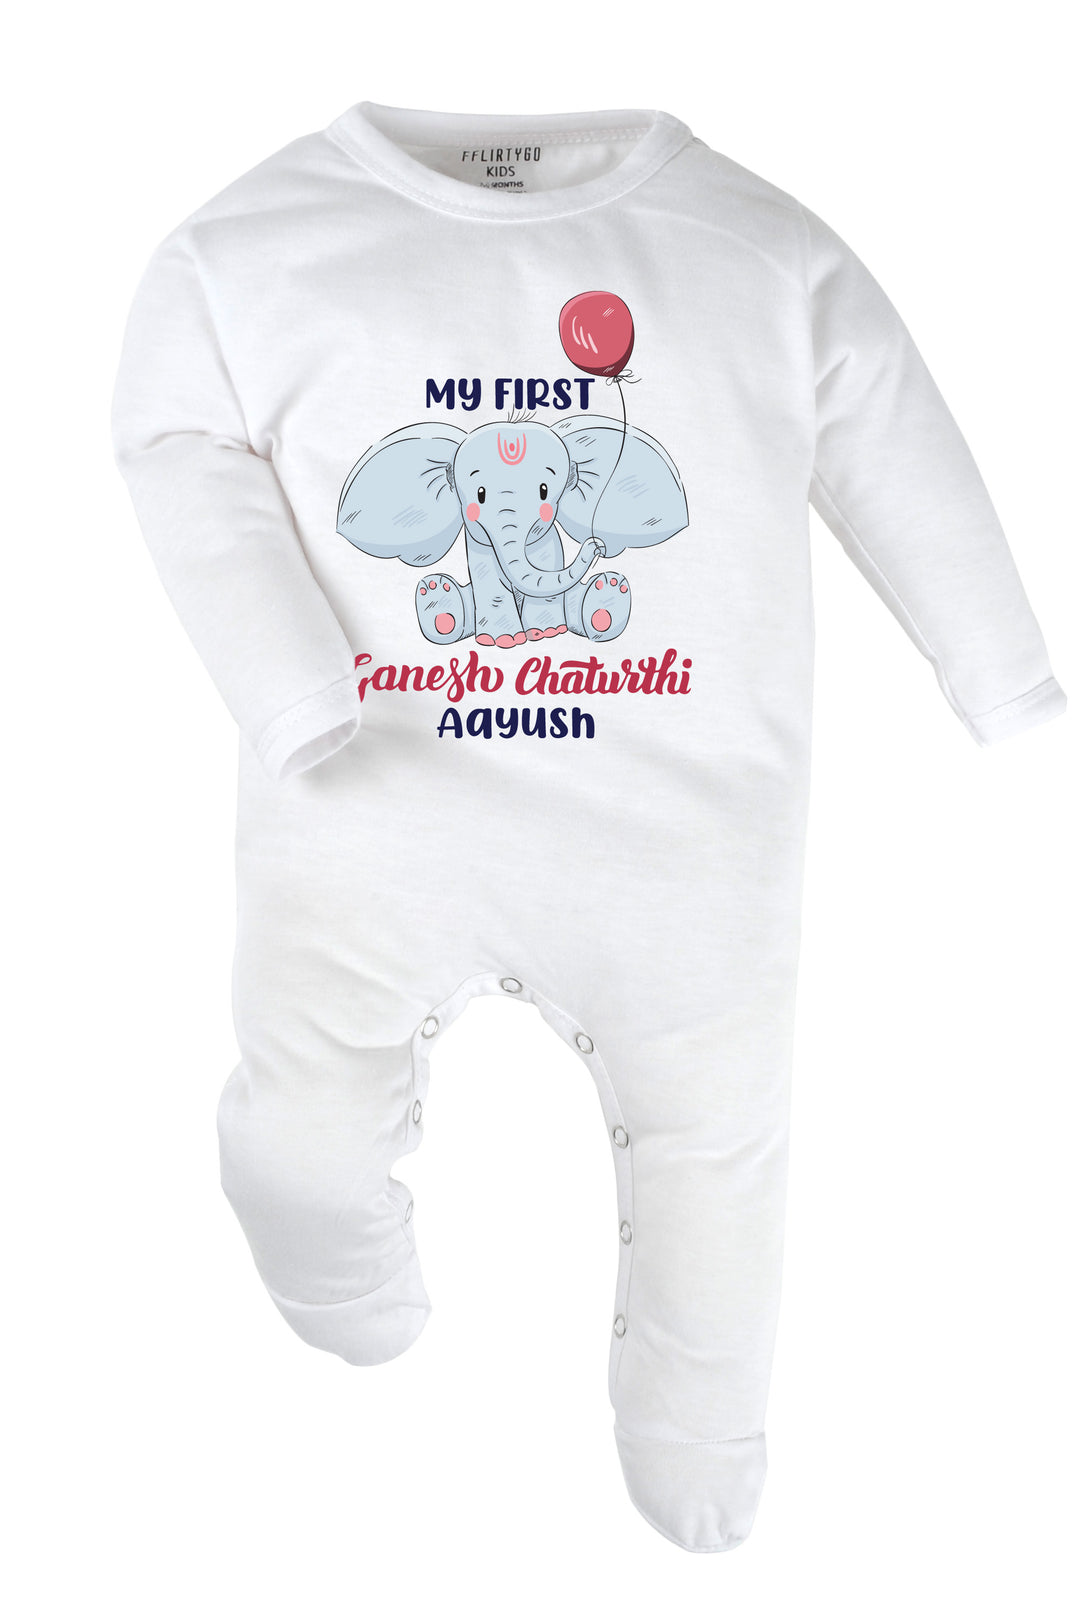 My First Ganesh Chaturthi Baby Romper | Onesies w/ Custom Name